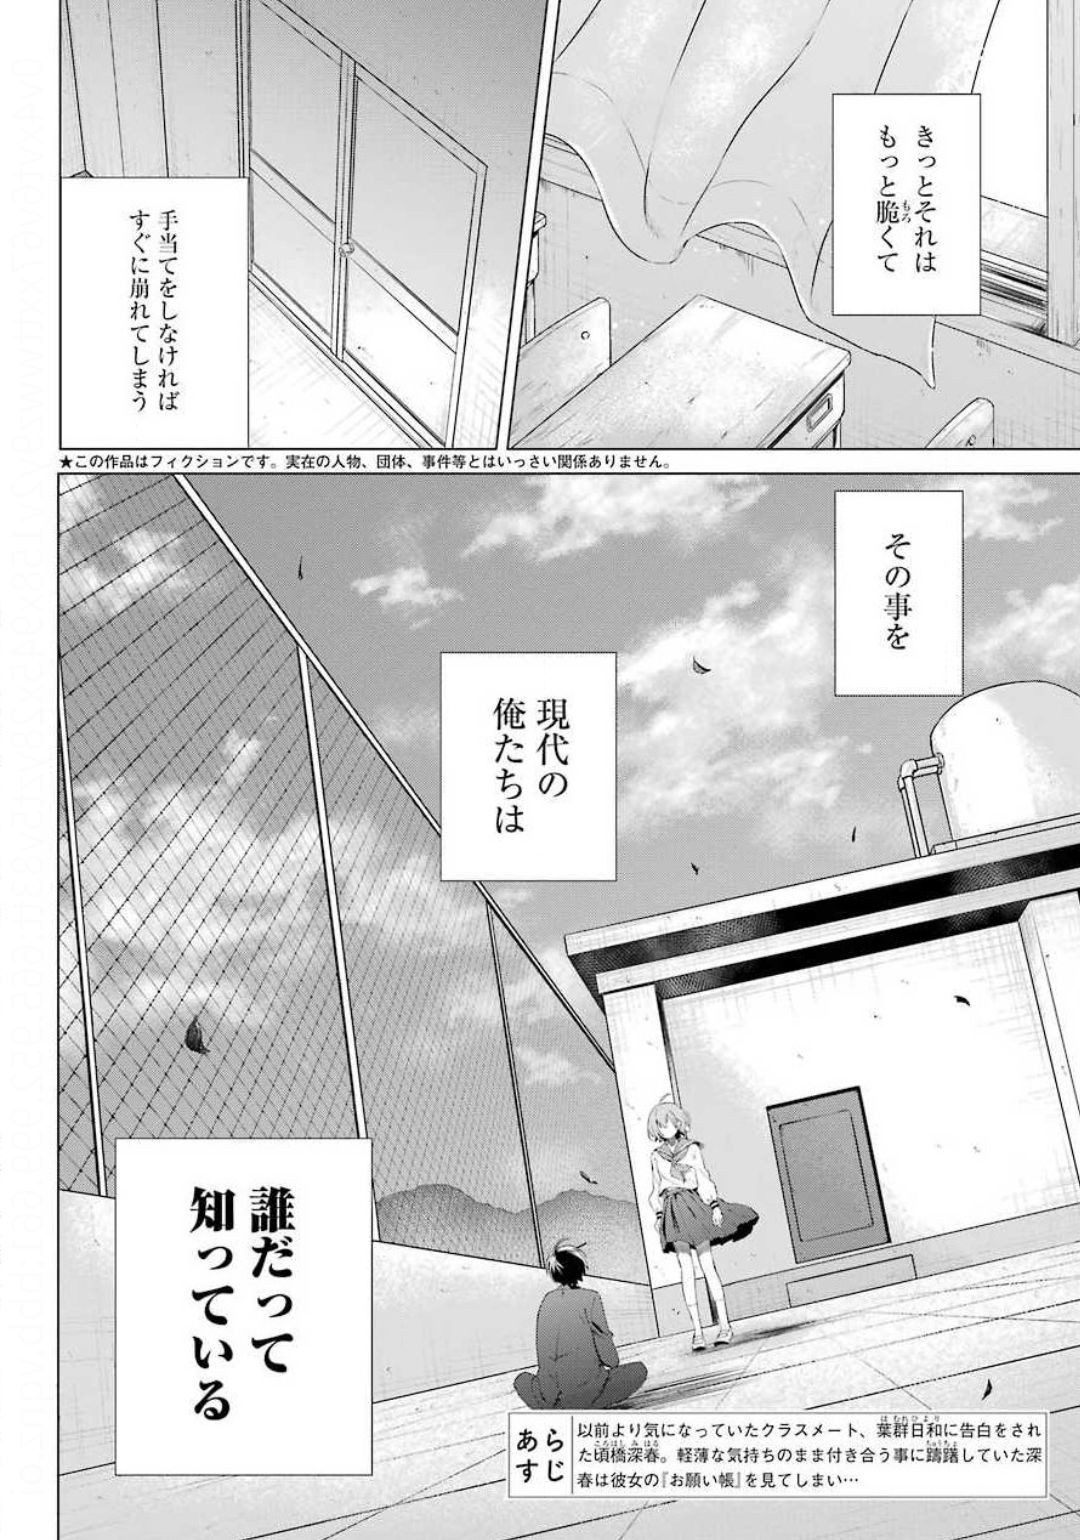 Hiyori-chan no Onegai wa Zettai - Chapter 02 - Page 2